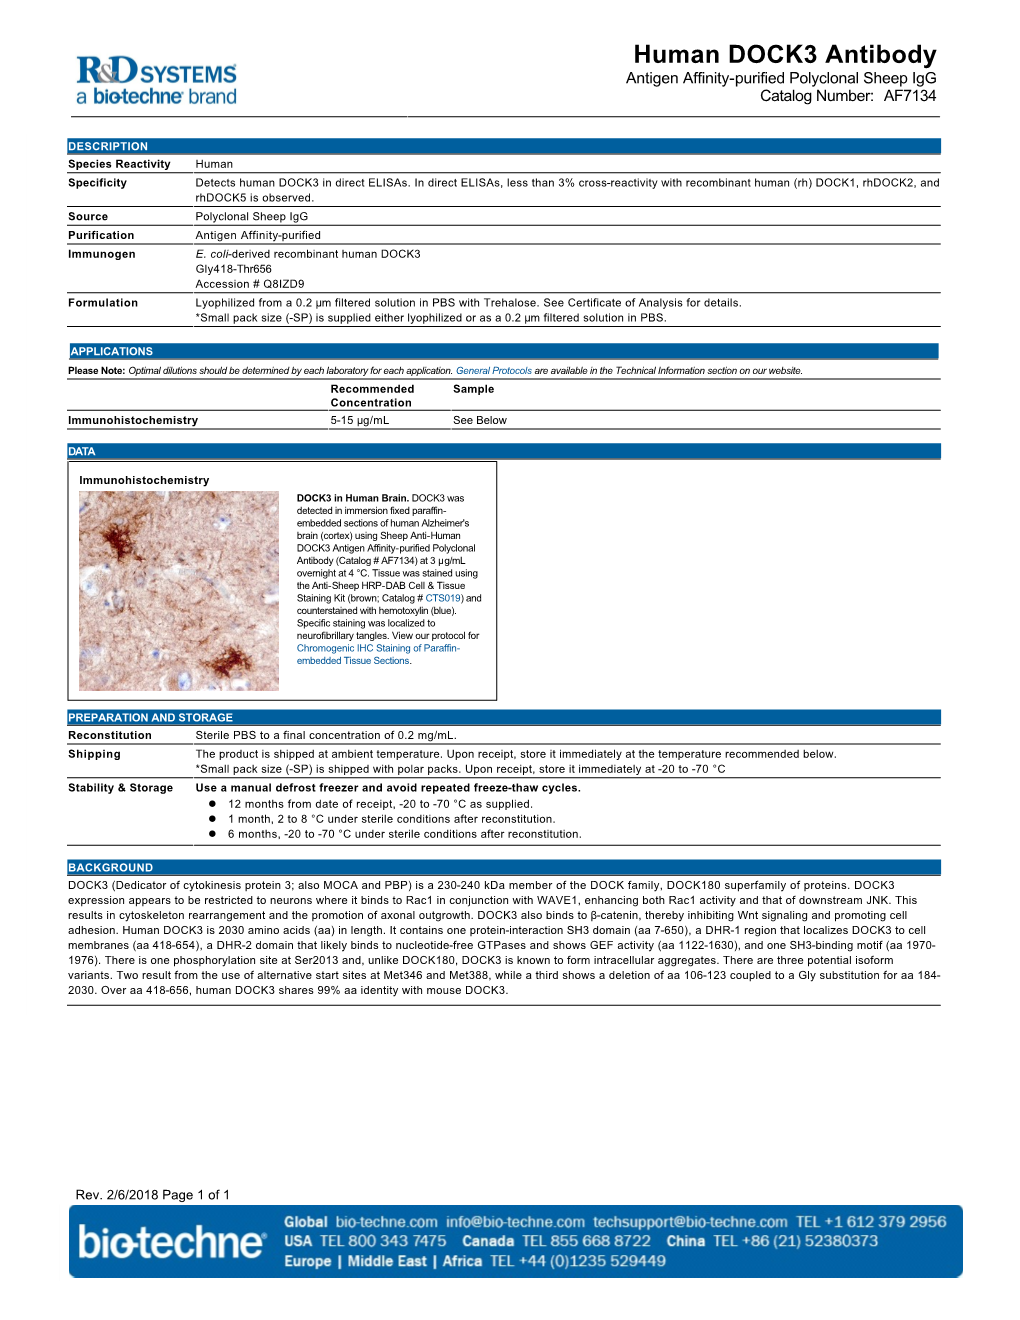 Human DOCK3 Antibody Antigen Affinity-Purified Polyclonal Sheep Igg Catalog Number: AF7134